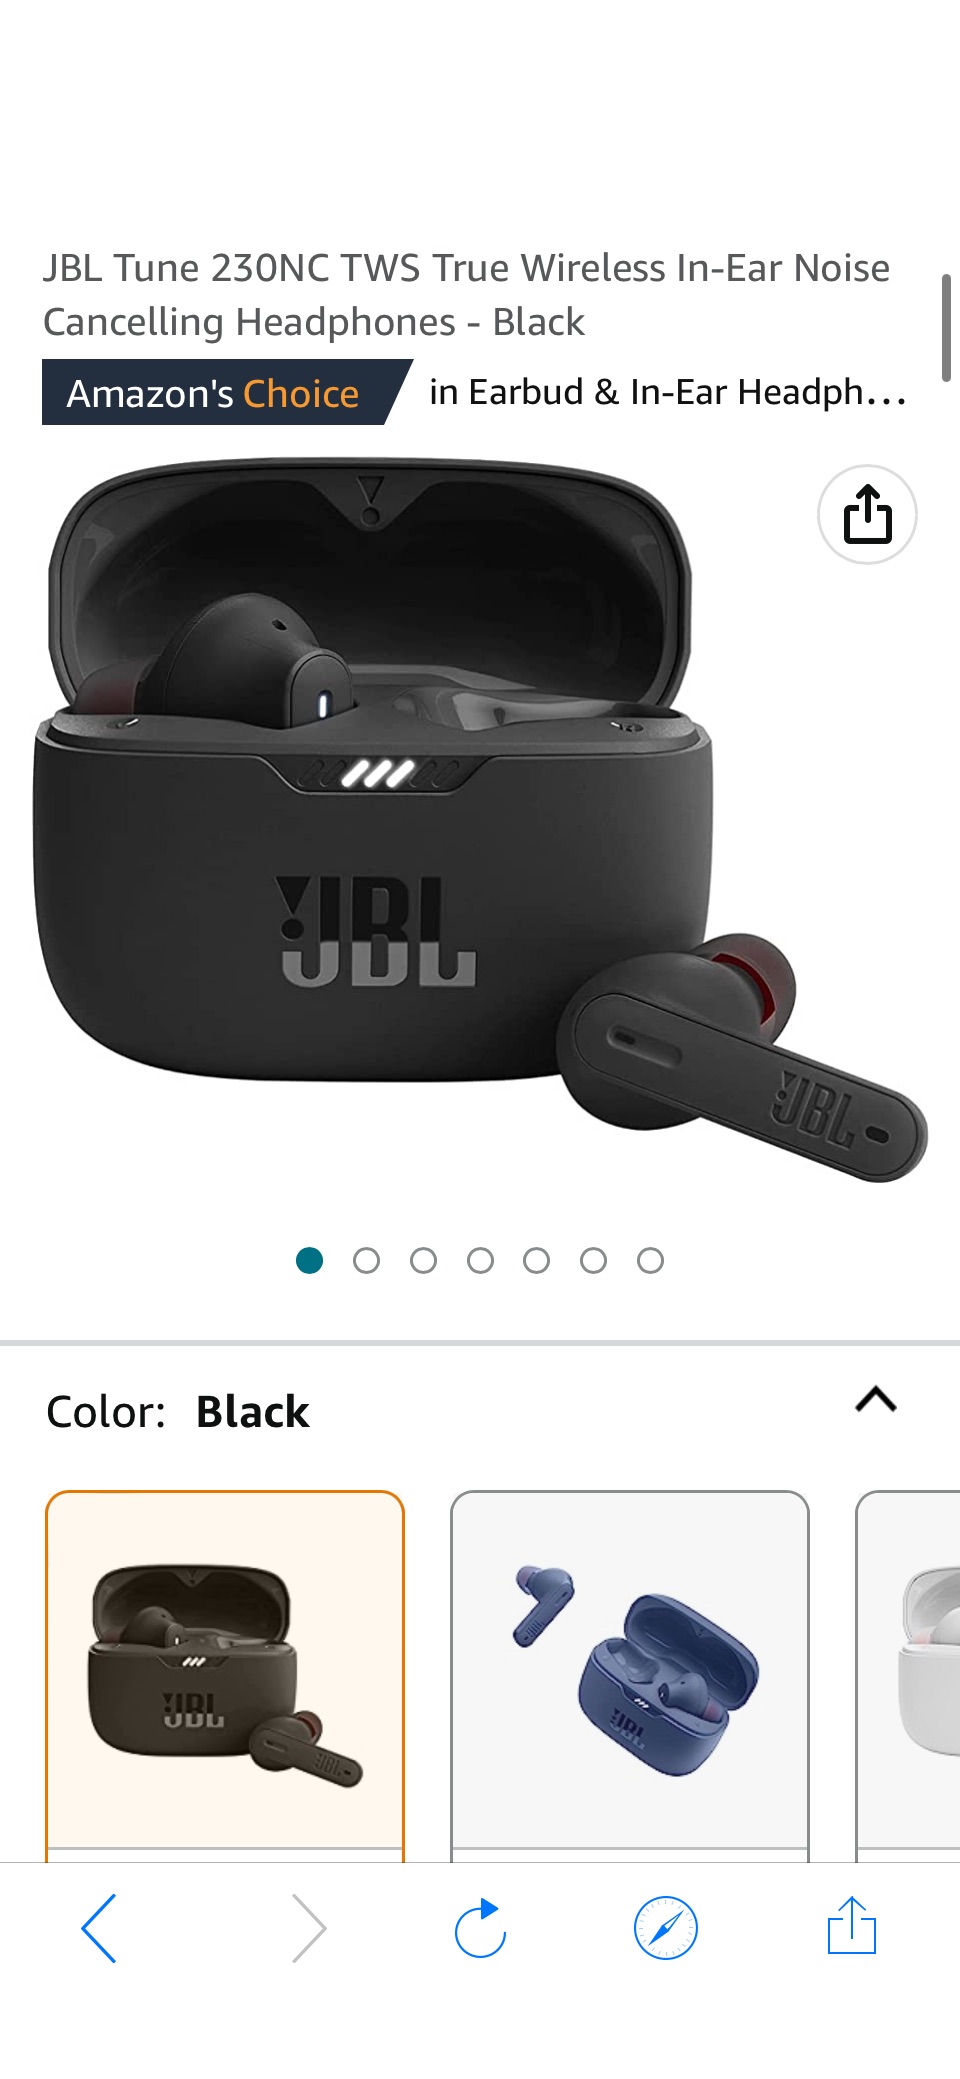 Amazon.com: JBL Tune 230NC TWS True Wireless In-Ear Noise Cancelling Headphones - Black : Electronics原价99.95